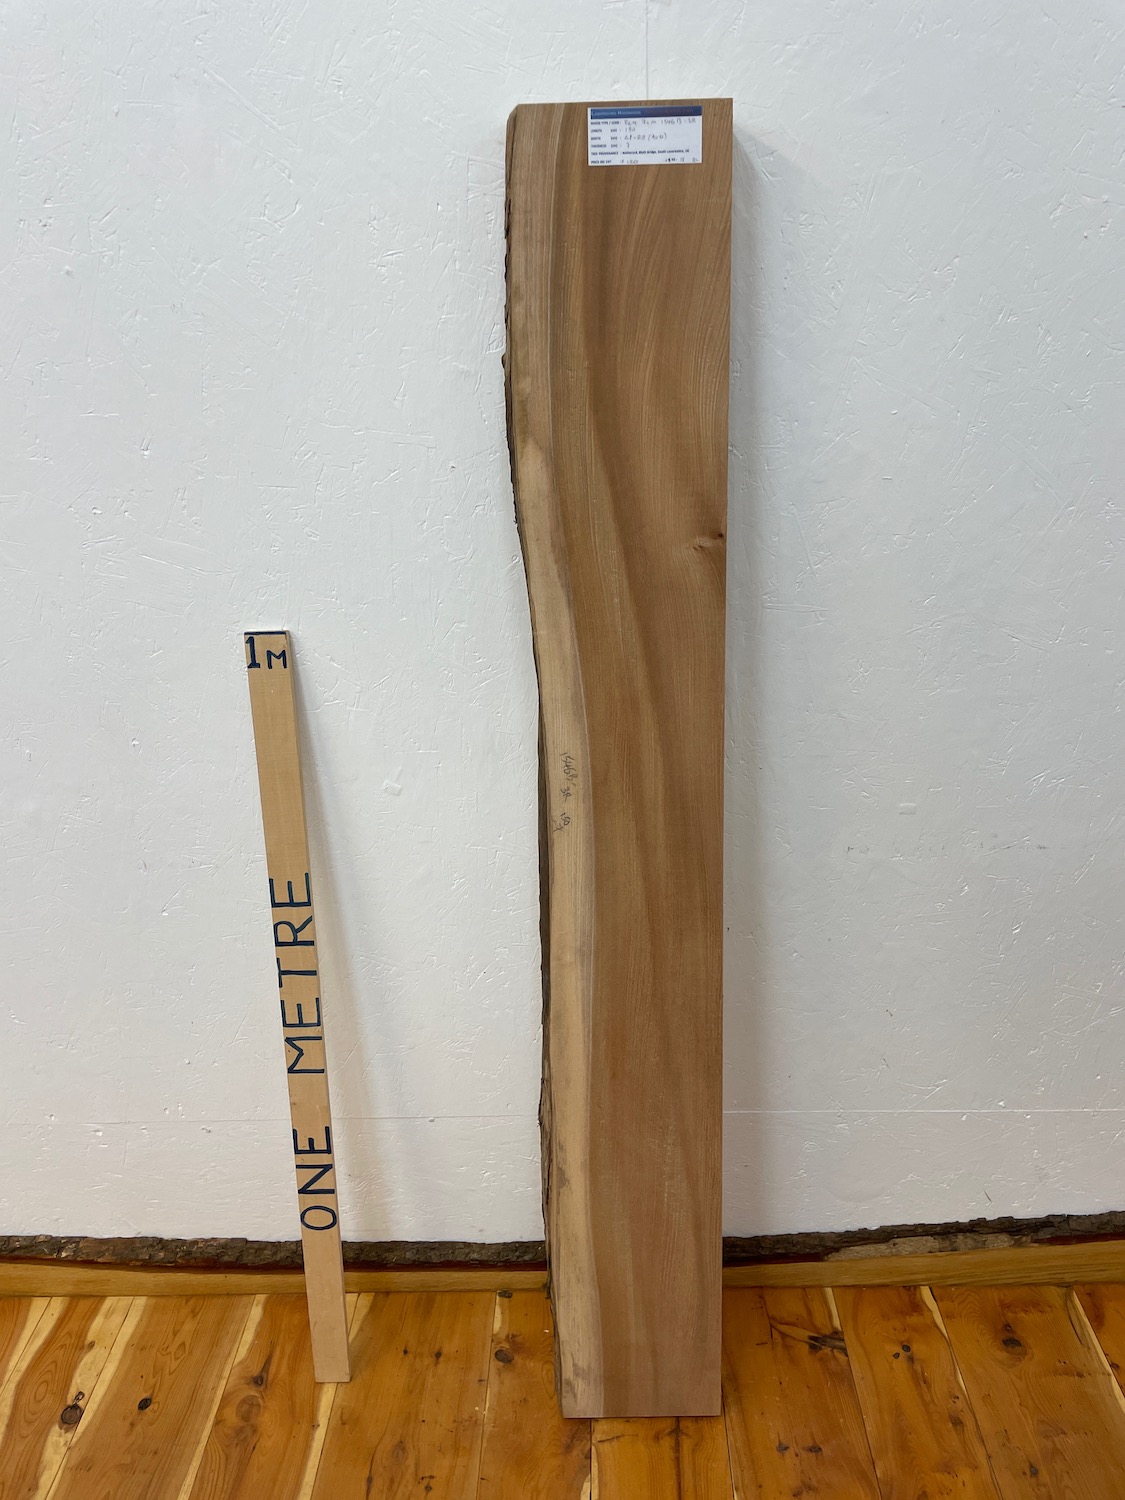 ELM Single Waney Natural Edge Board 1546B-3R Thickness 7cm Kiln Dried Planed & Thicknessed Seasoned Hardwood Live Edge